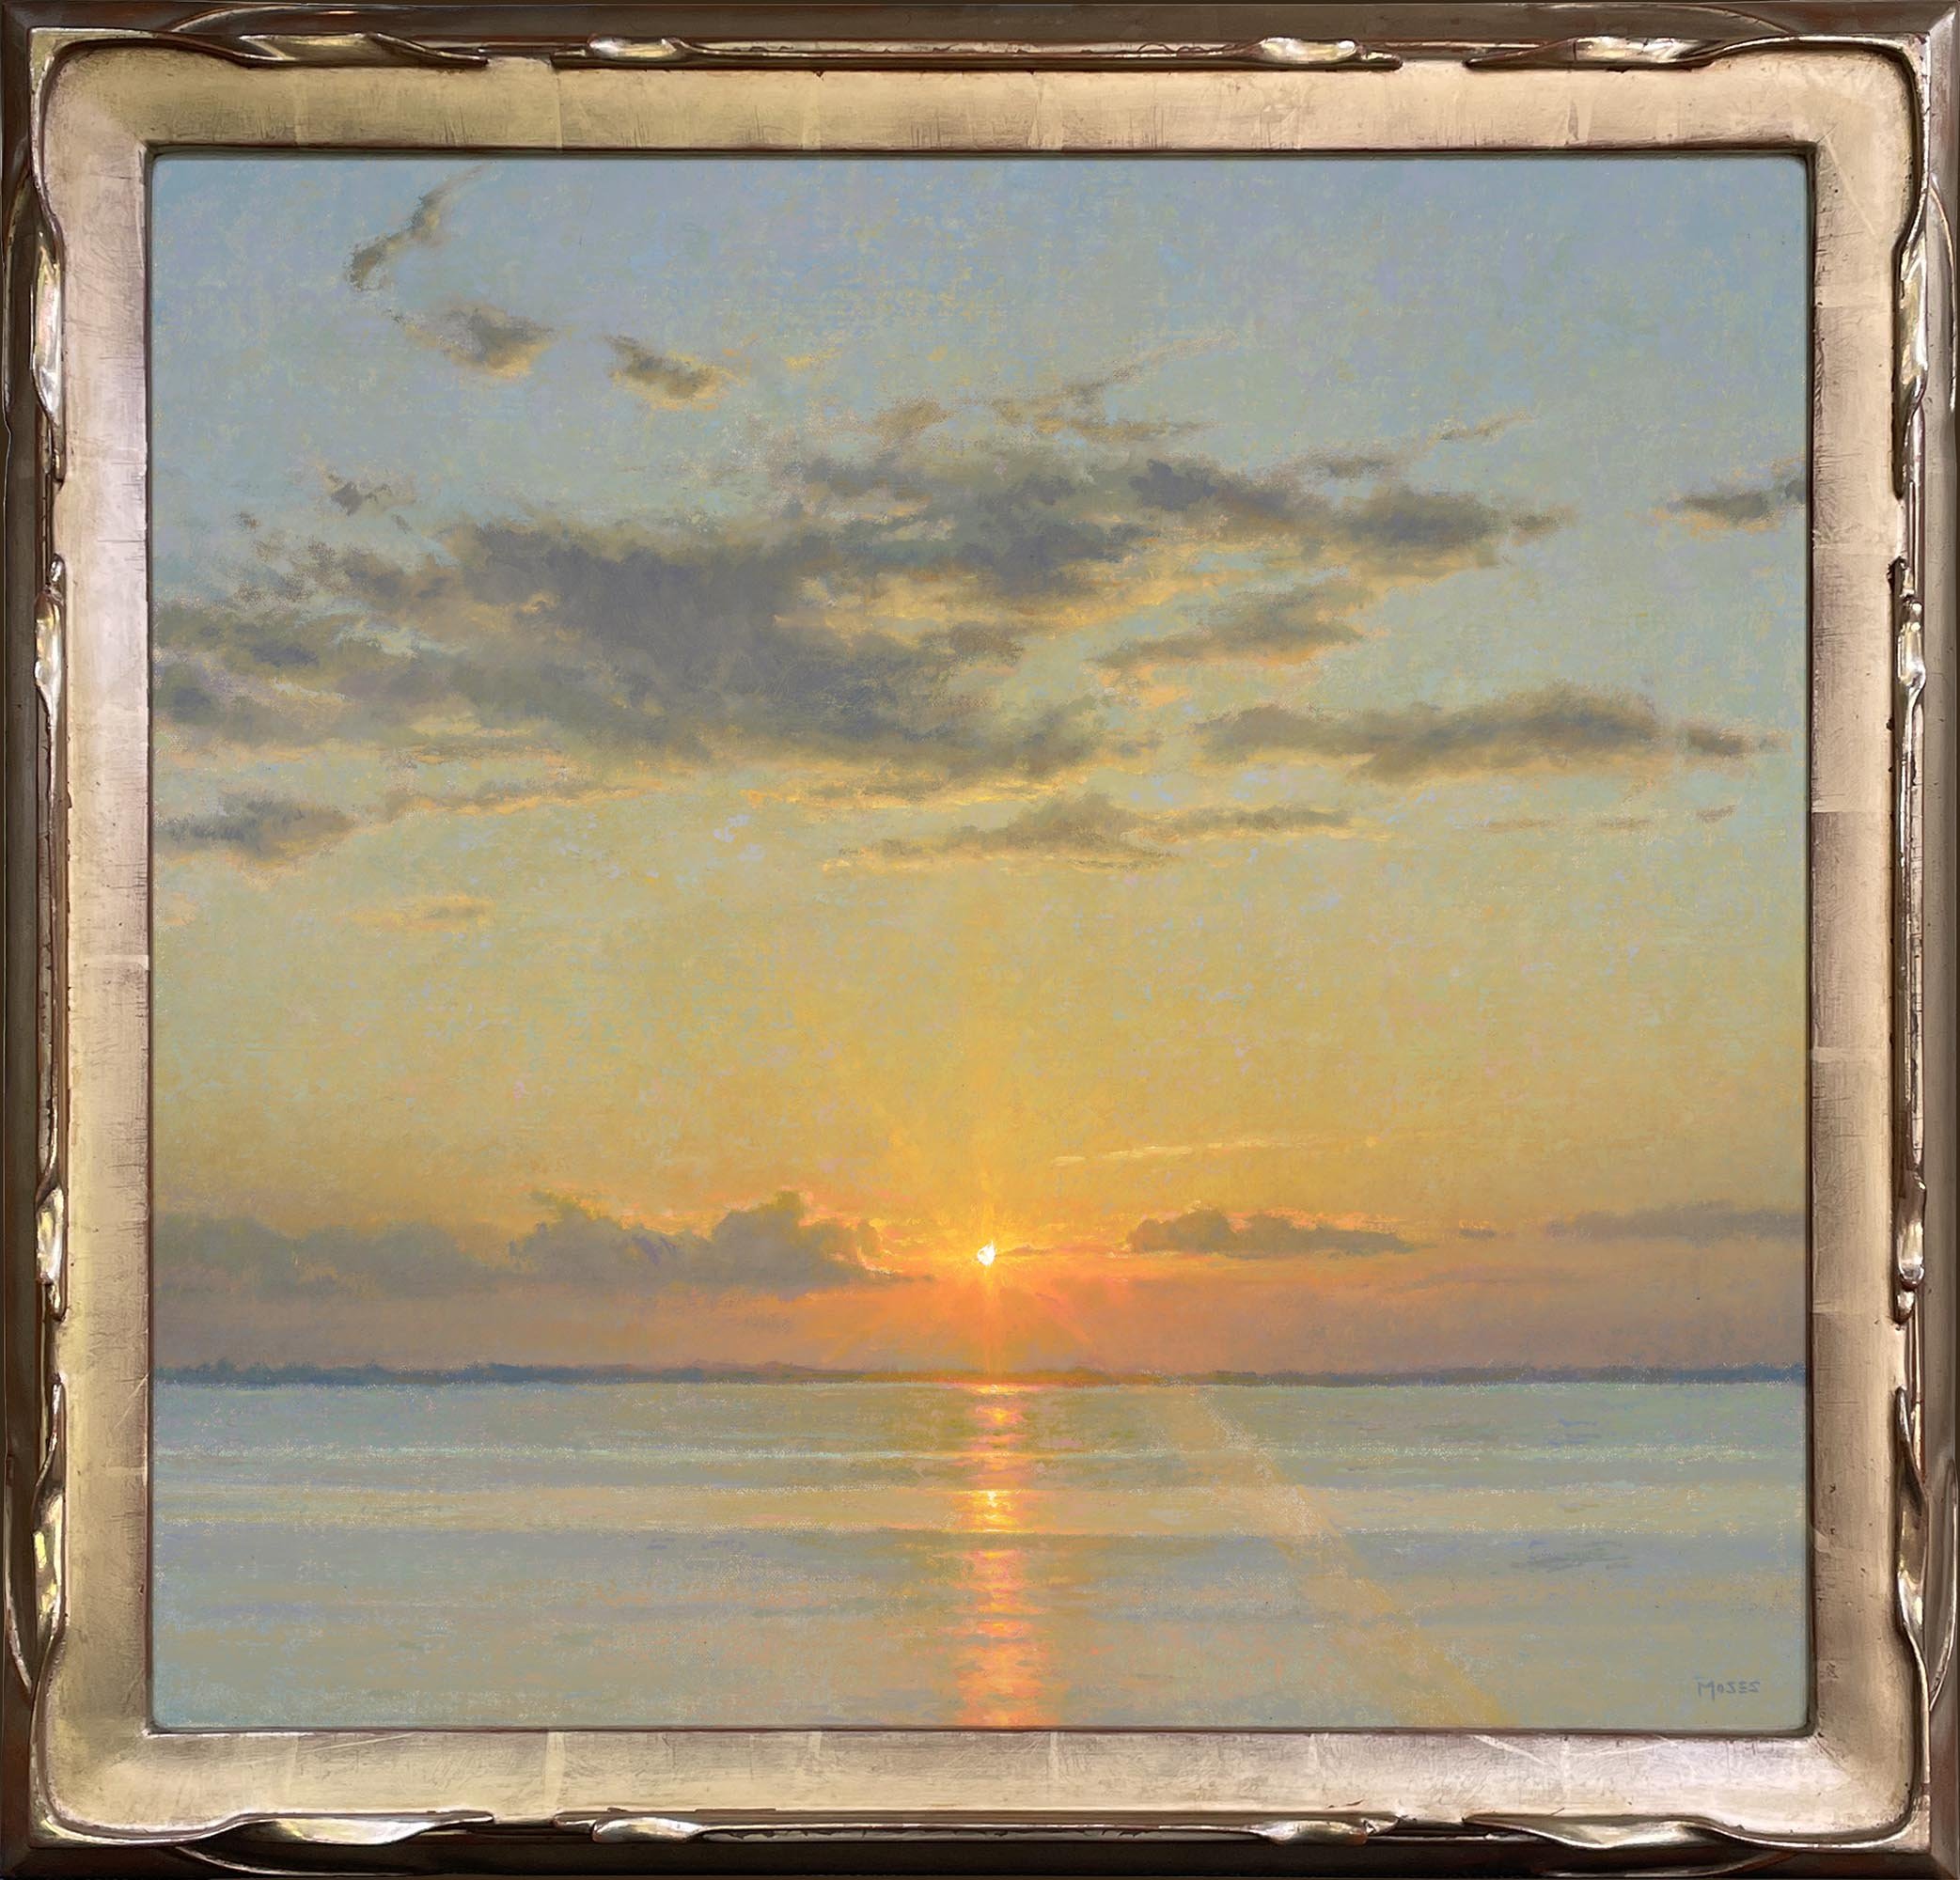 Chris KirkegaardSummer Sunset 20x21 72 Framed.jpg